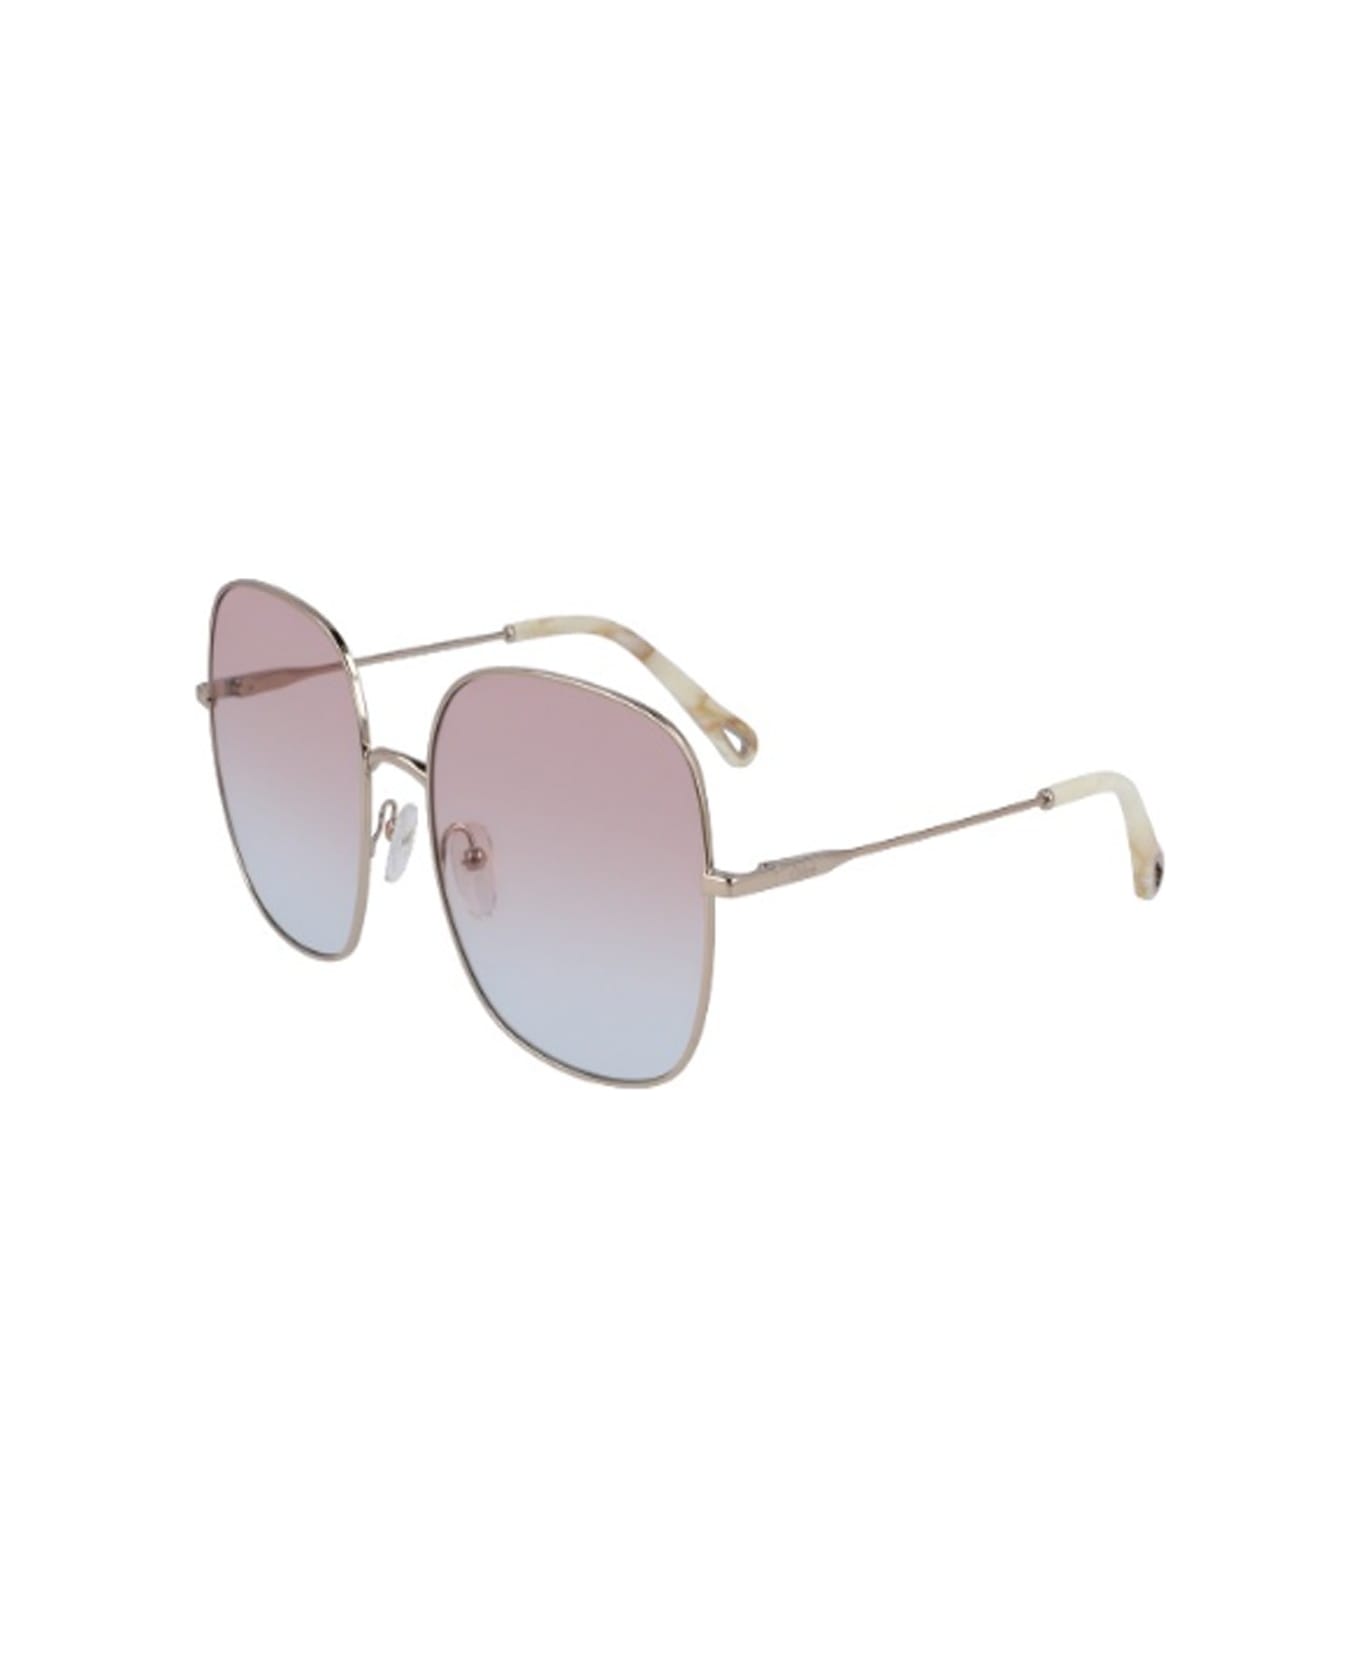 Chloé Ce172s Sunglasses - Oro サングラス